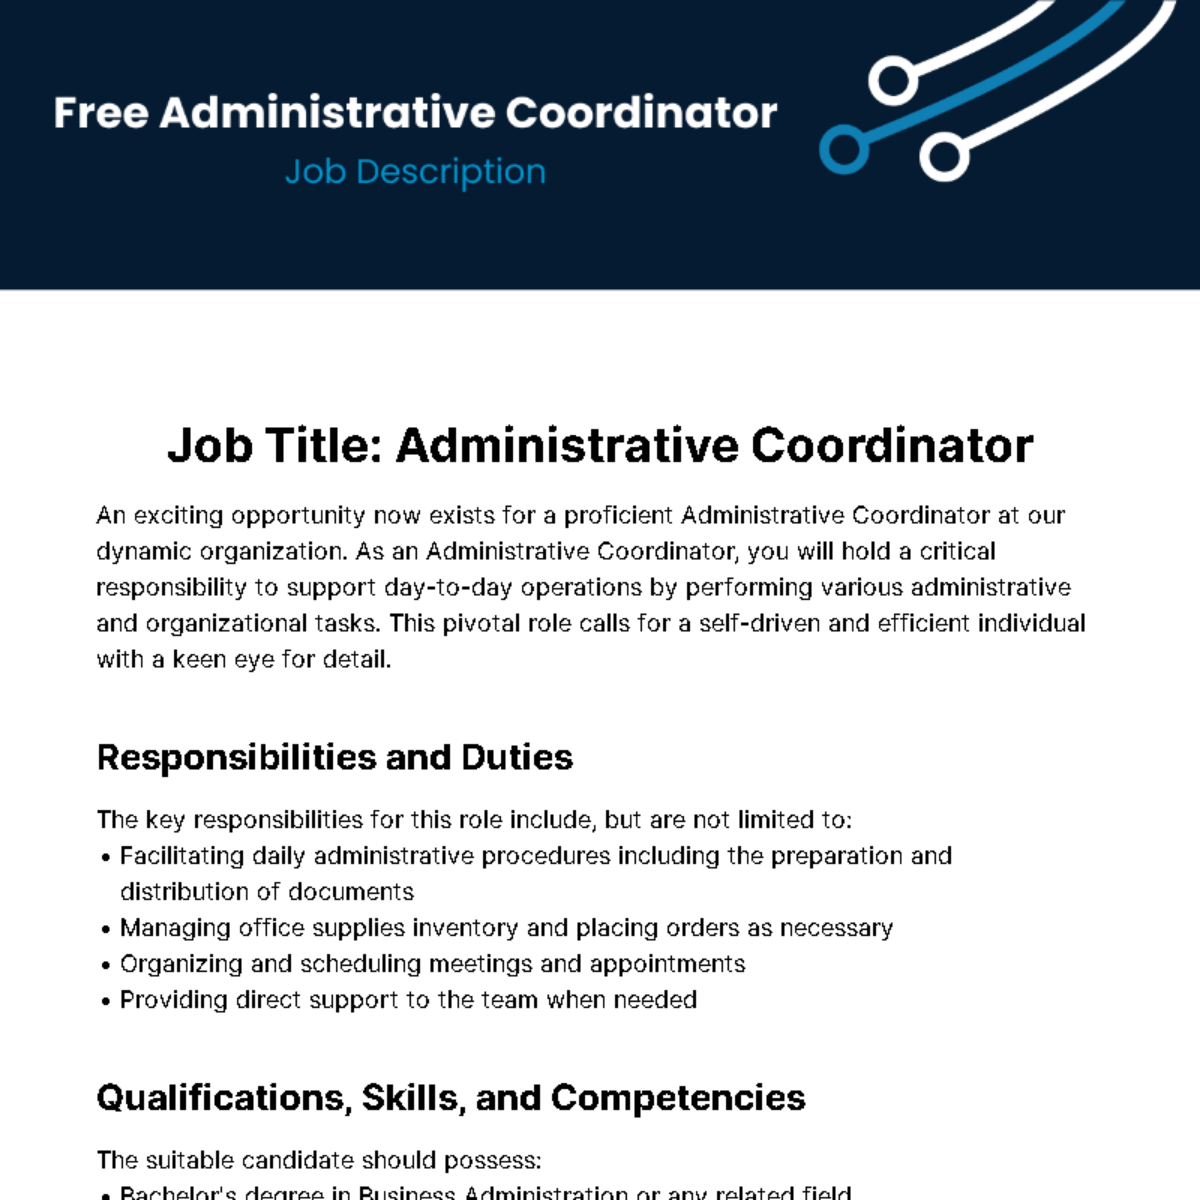 Free Administrative Coordinator Job Description Template